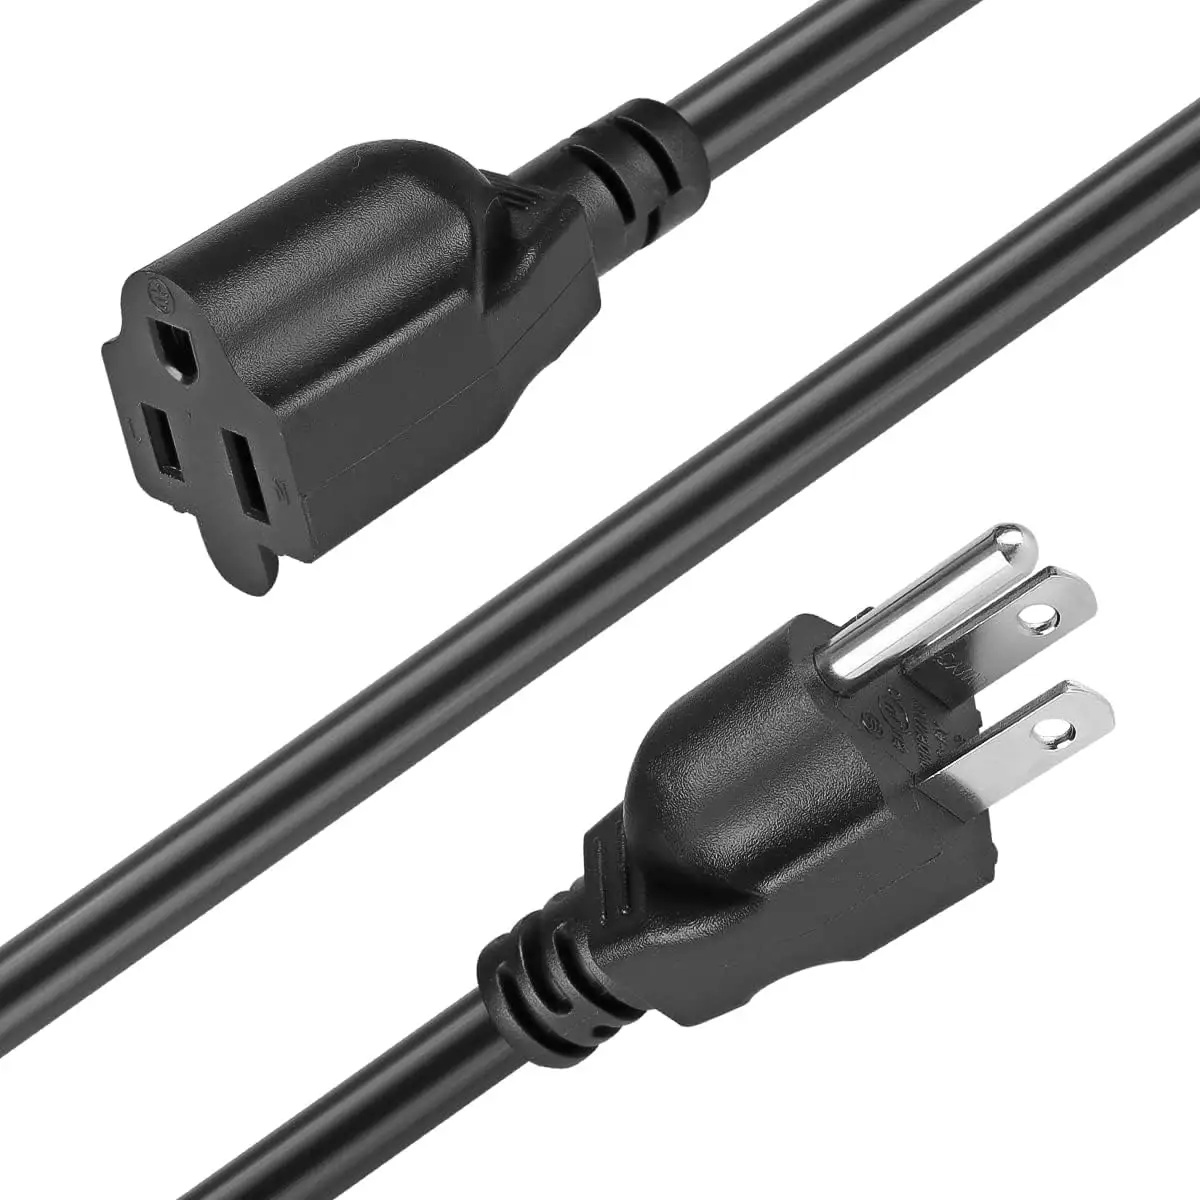 Cable de enchufe de clavija 3pin 10A/13A/15A Cables de CA Cable de alimentación eléctrico IEC C13 Cable de alimentación de EE. UU. Aprobado directo de fábrica de EE. UU. 3 pines negro 3 salidas